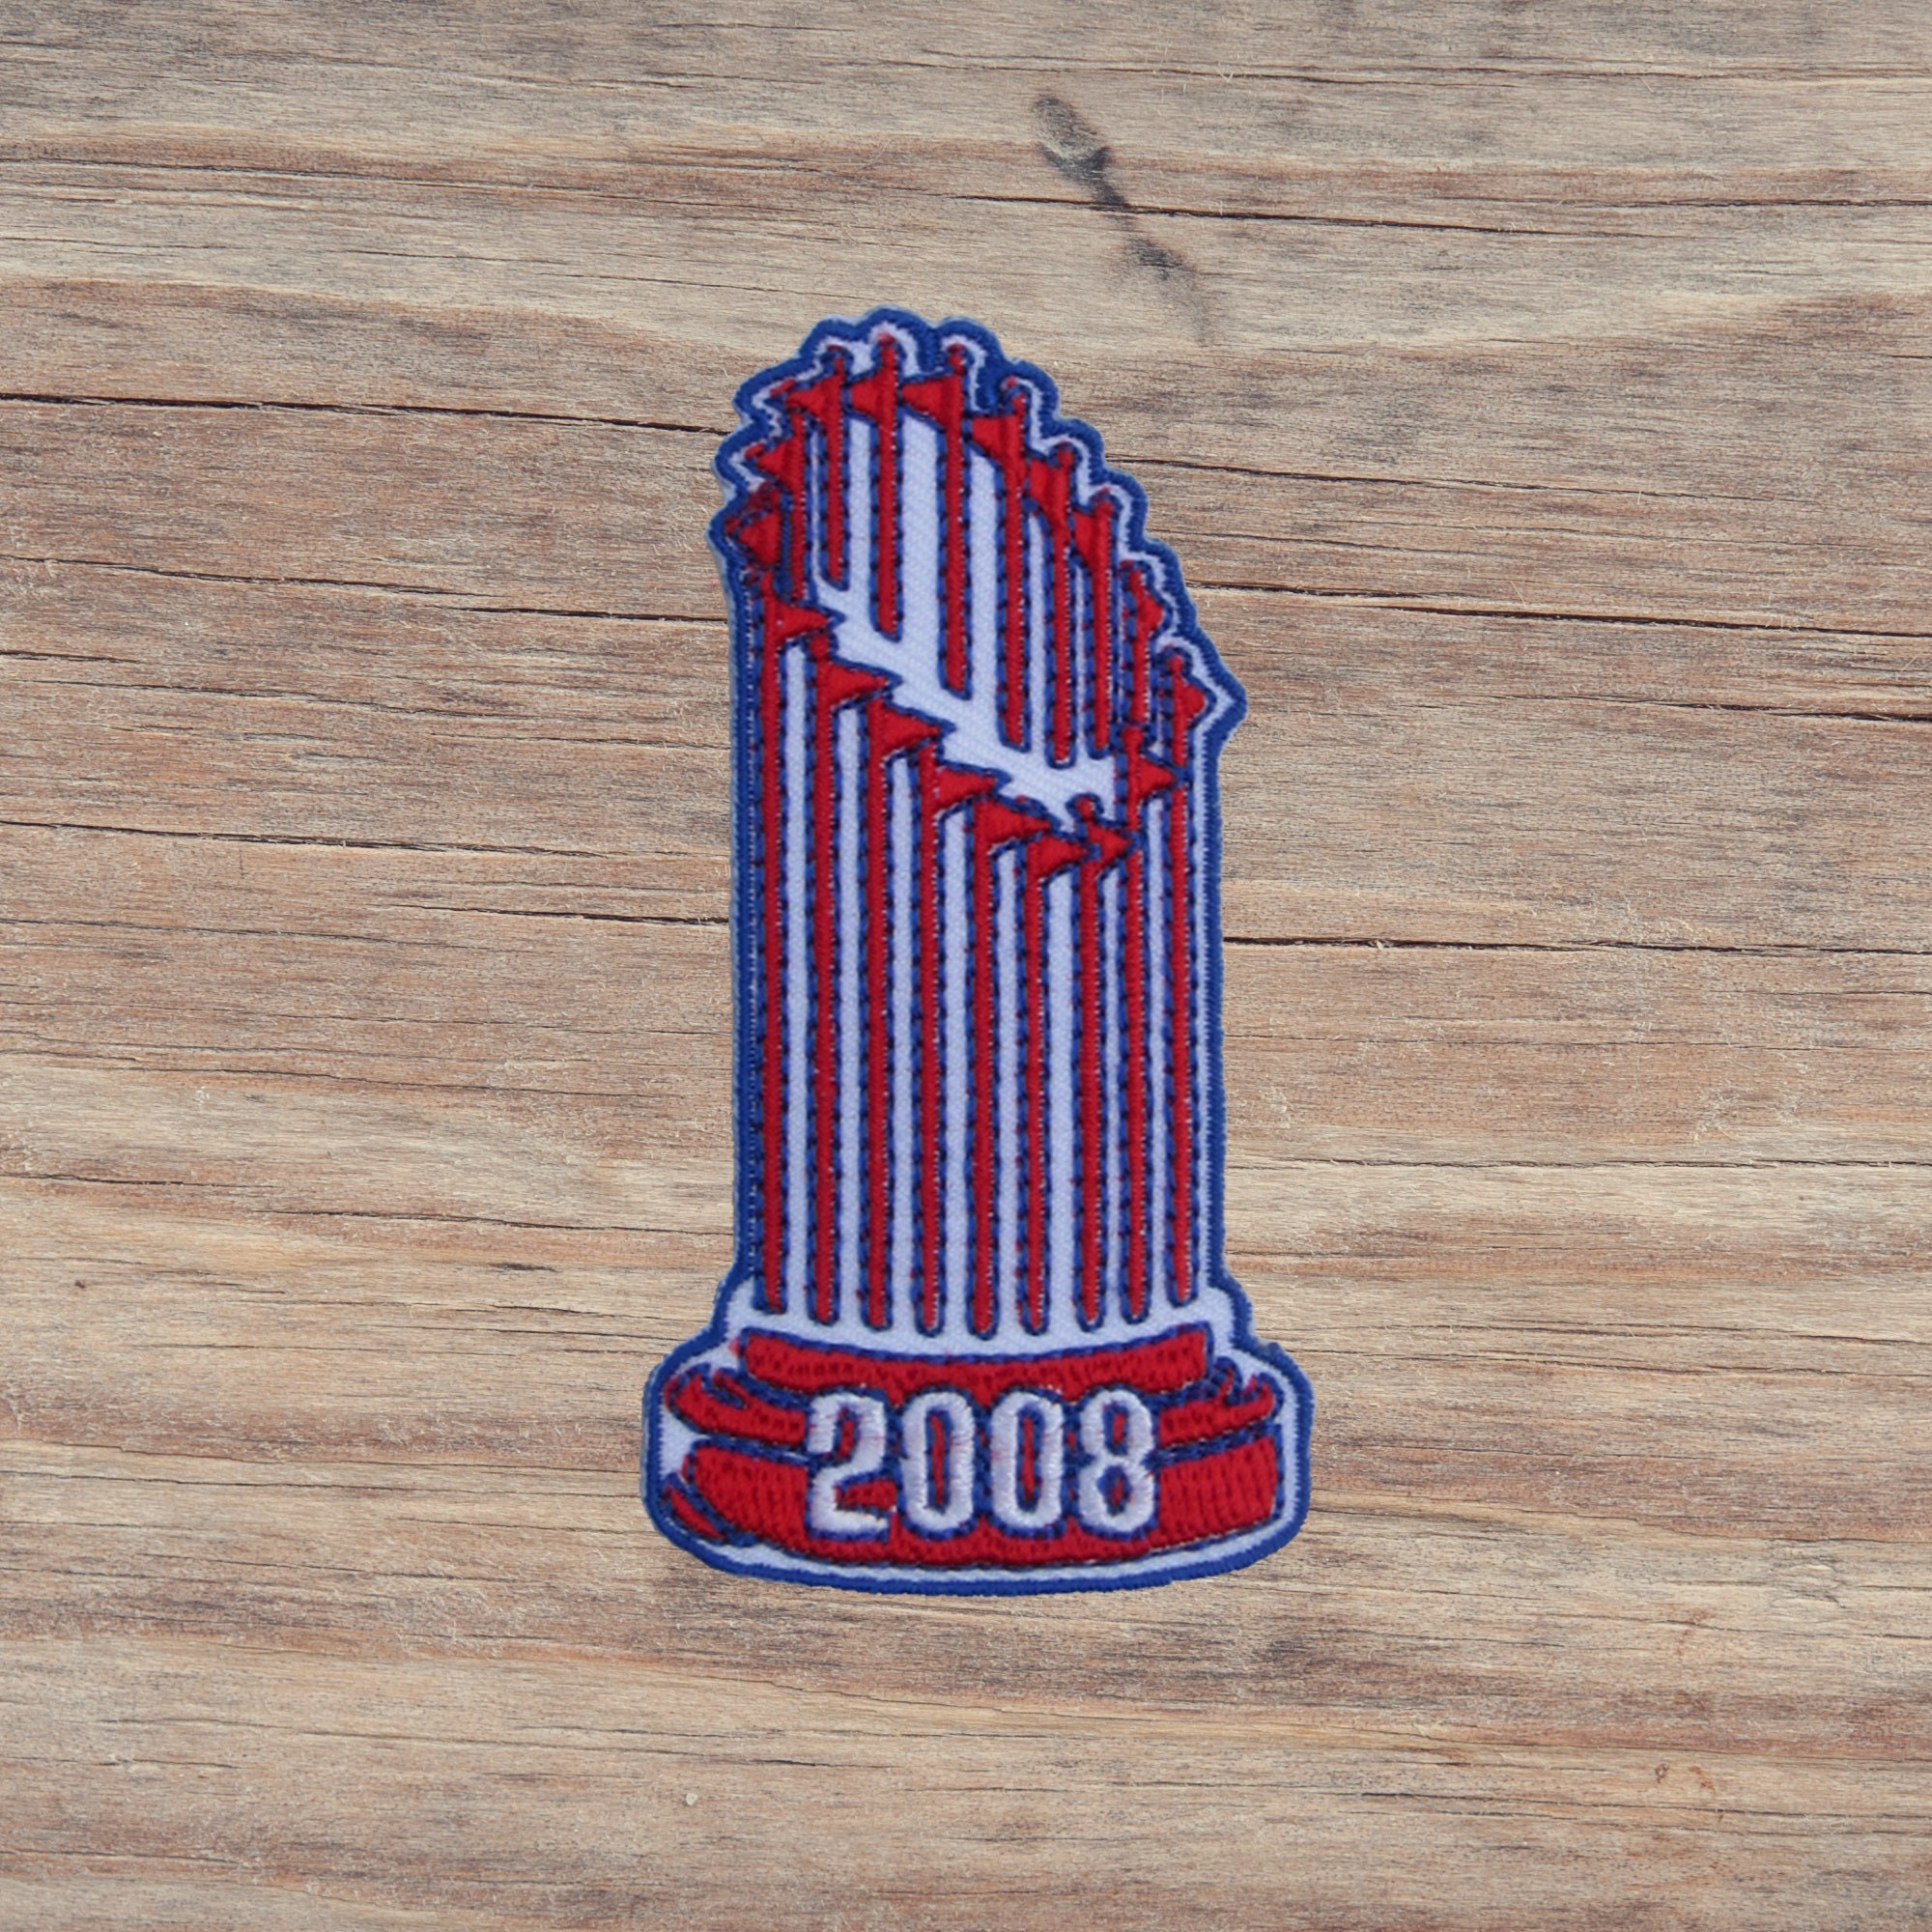 2008 World Series Philadelphia Phillies vs.Tampa Bay Rays - This